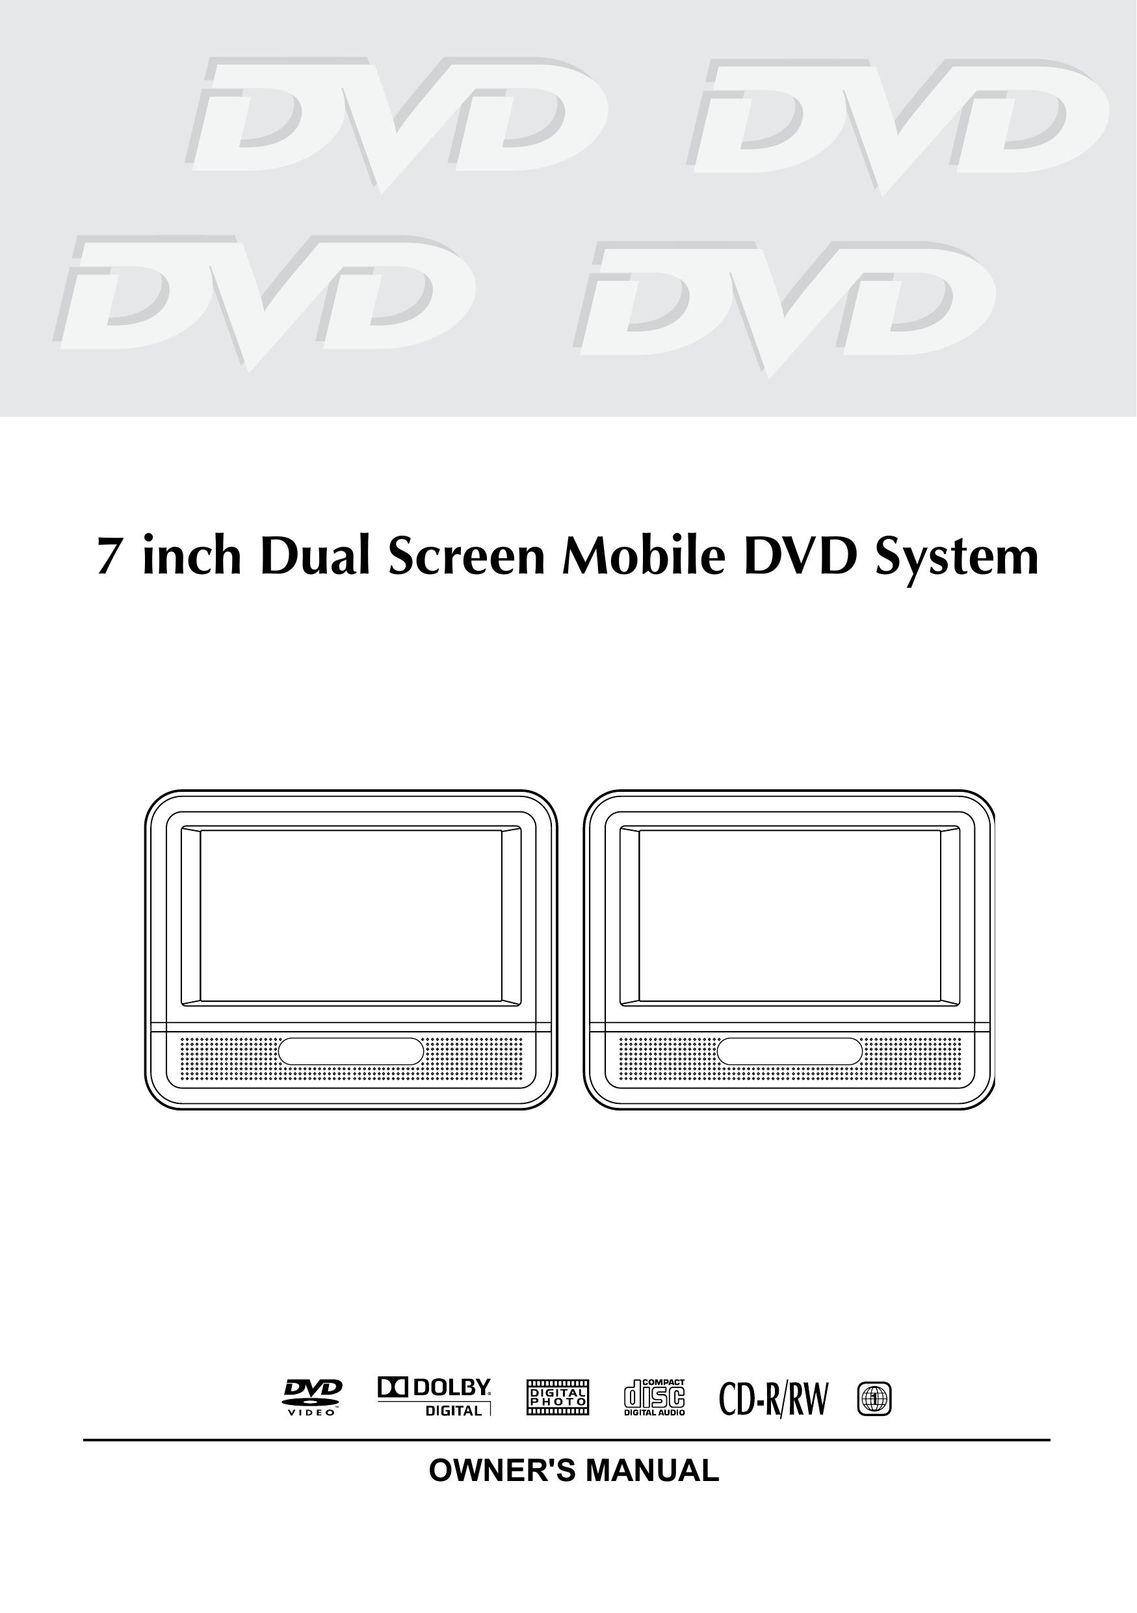 Venturer GB - 1 Portable DVD Player User Manual